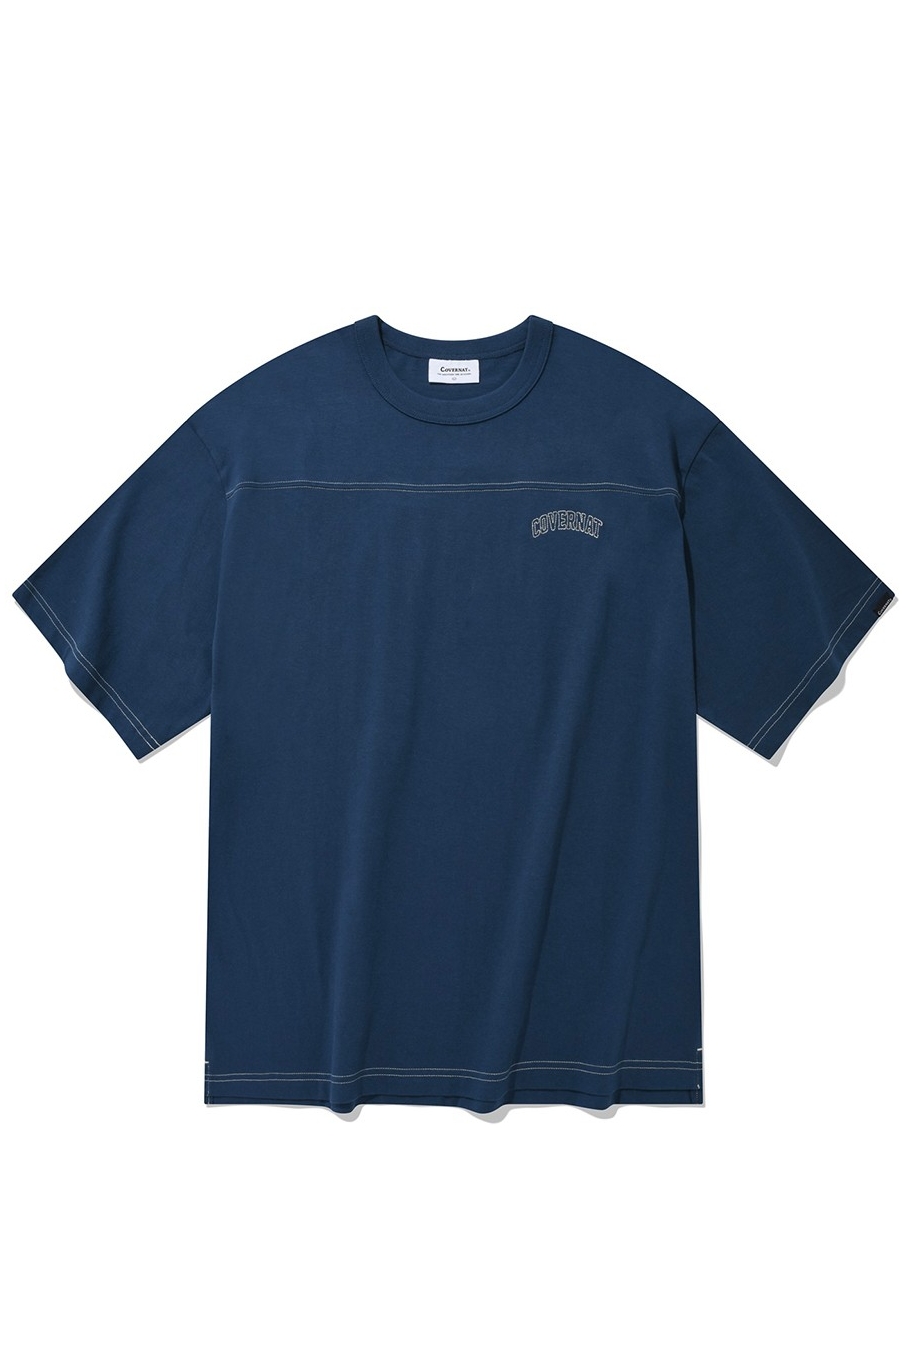 Covernat Unisex Small Arch Logo Football Tee Shirt Blue | Graphic Tees ...